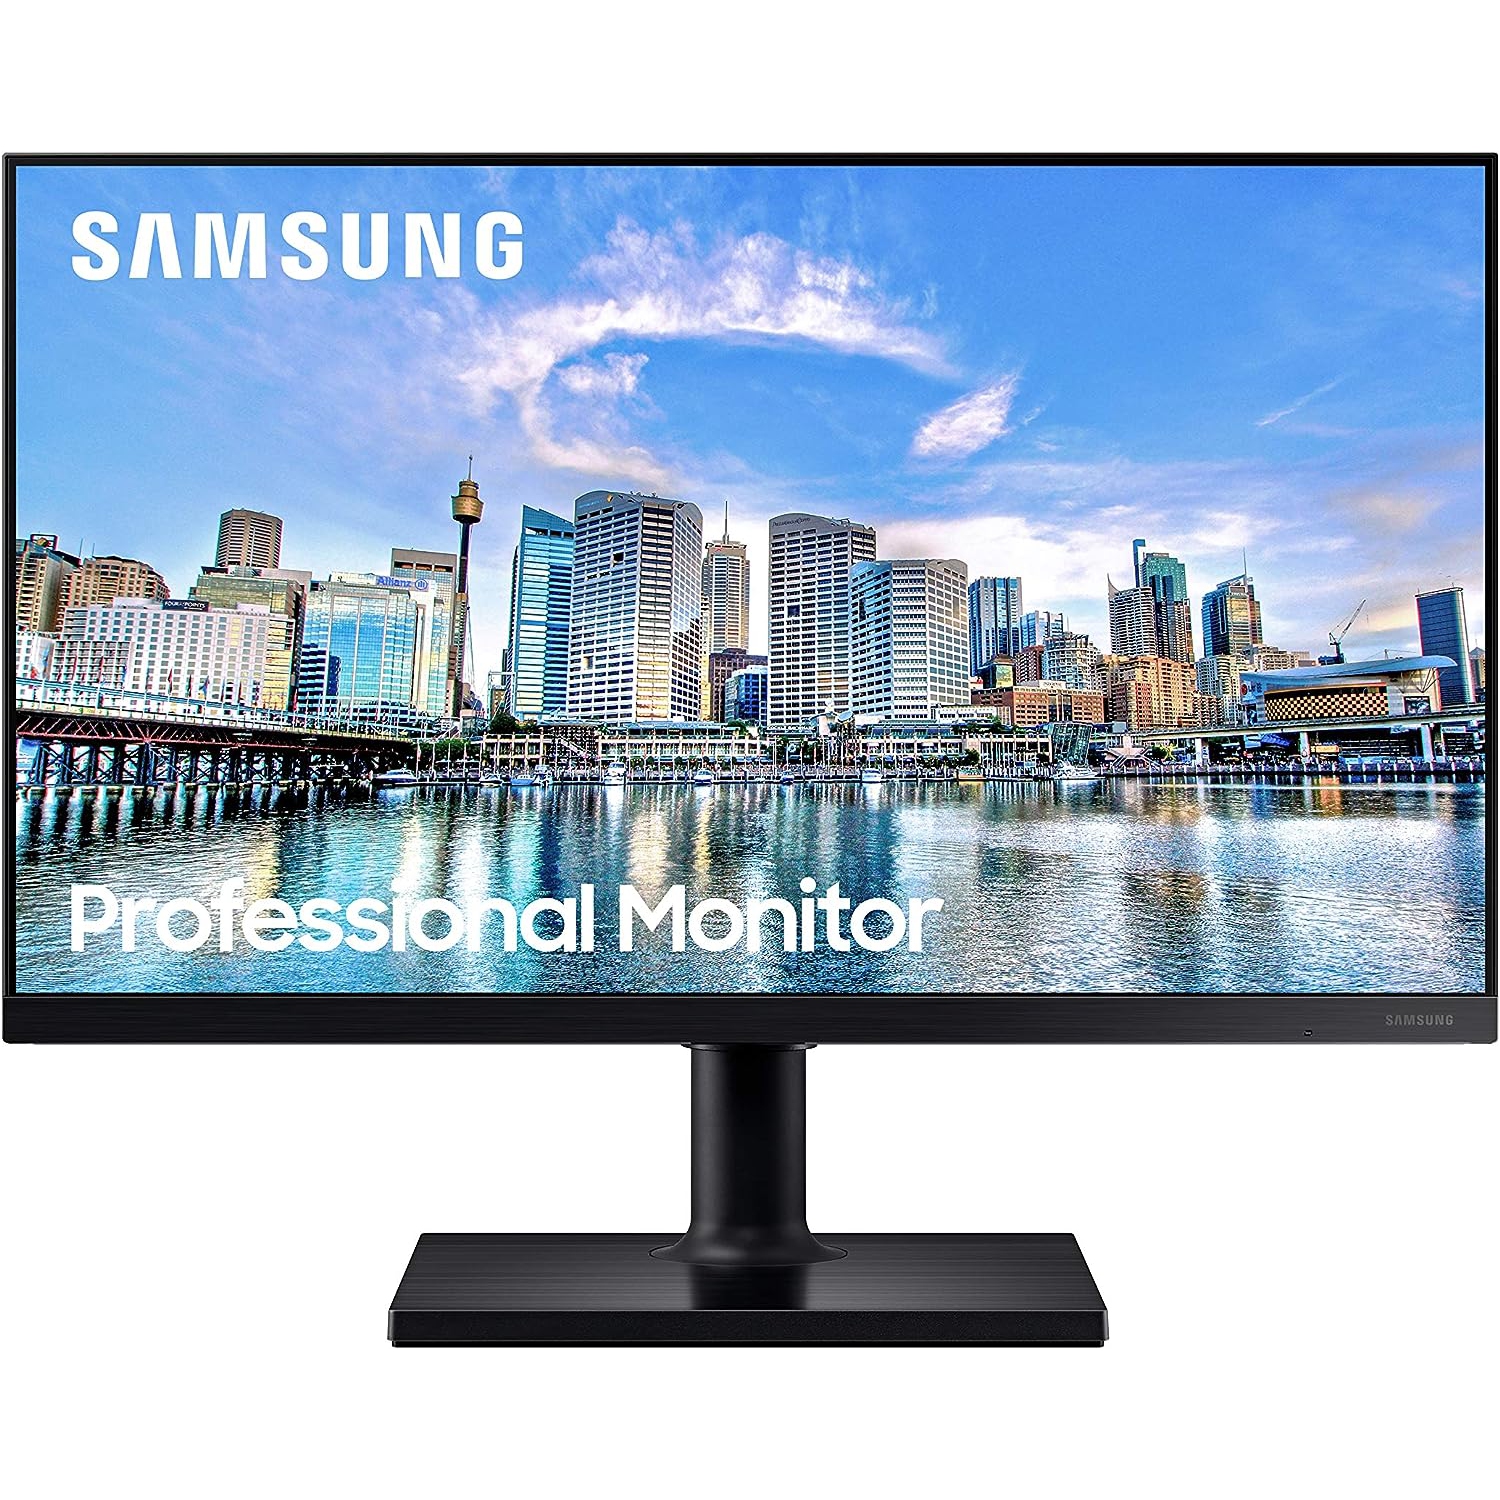 Samsung 22'' Full HD 75Hz 5ms GTG IPS Ergonomic Monitor (LF22T454FQNXGO) - Black